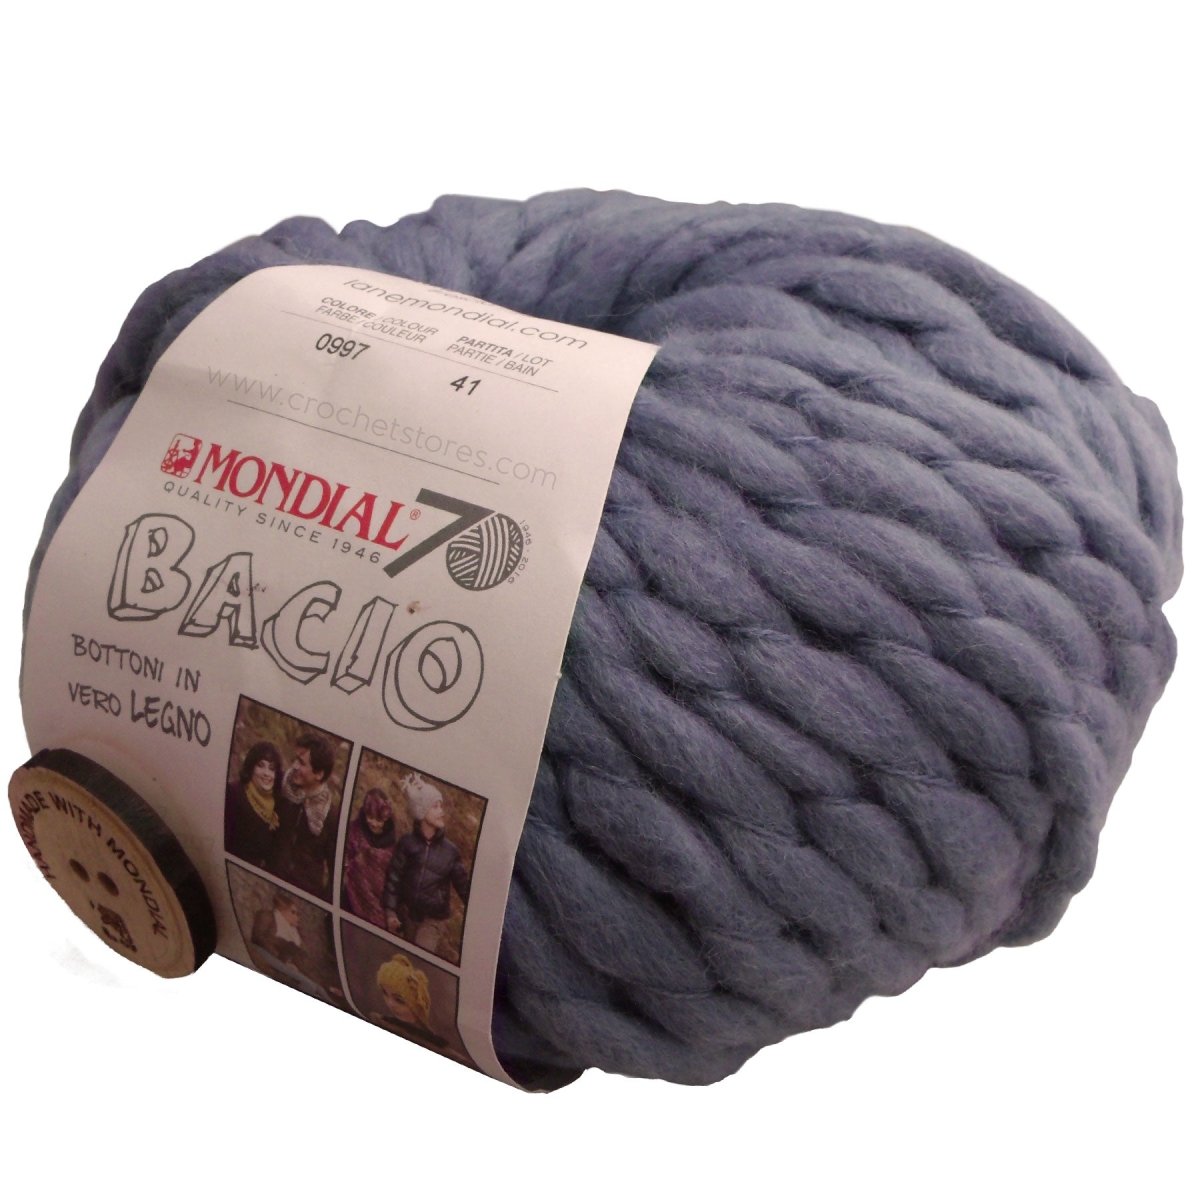 BACIO - Crochetstores12019978020586411498